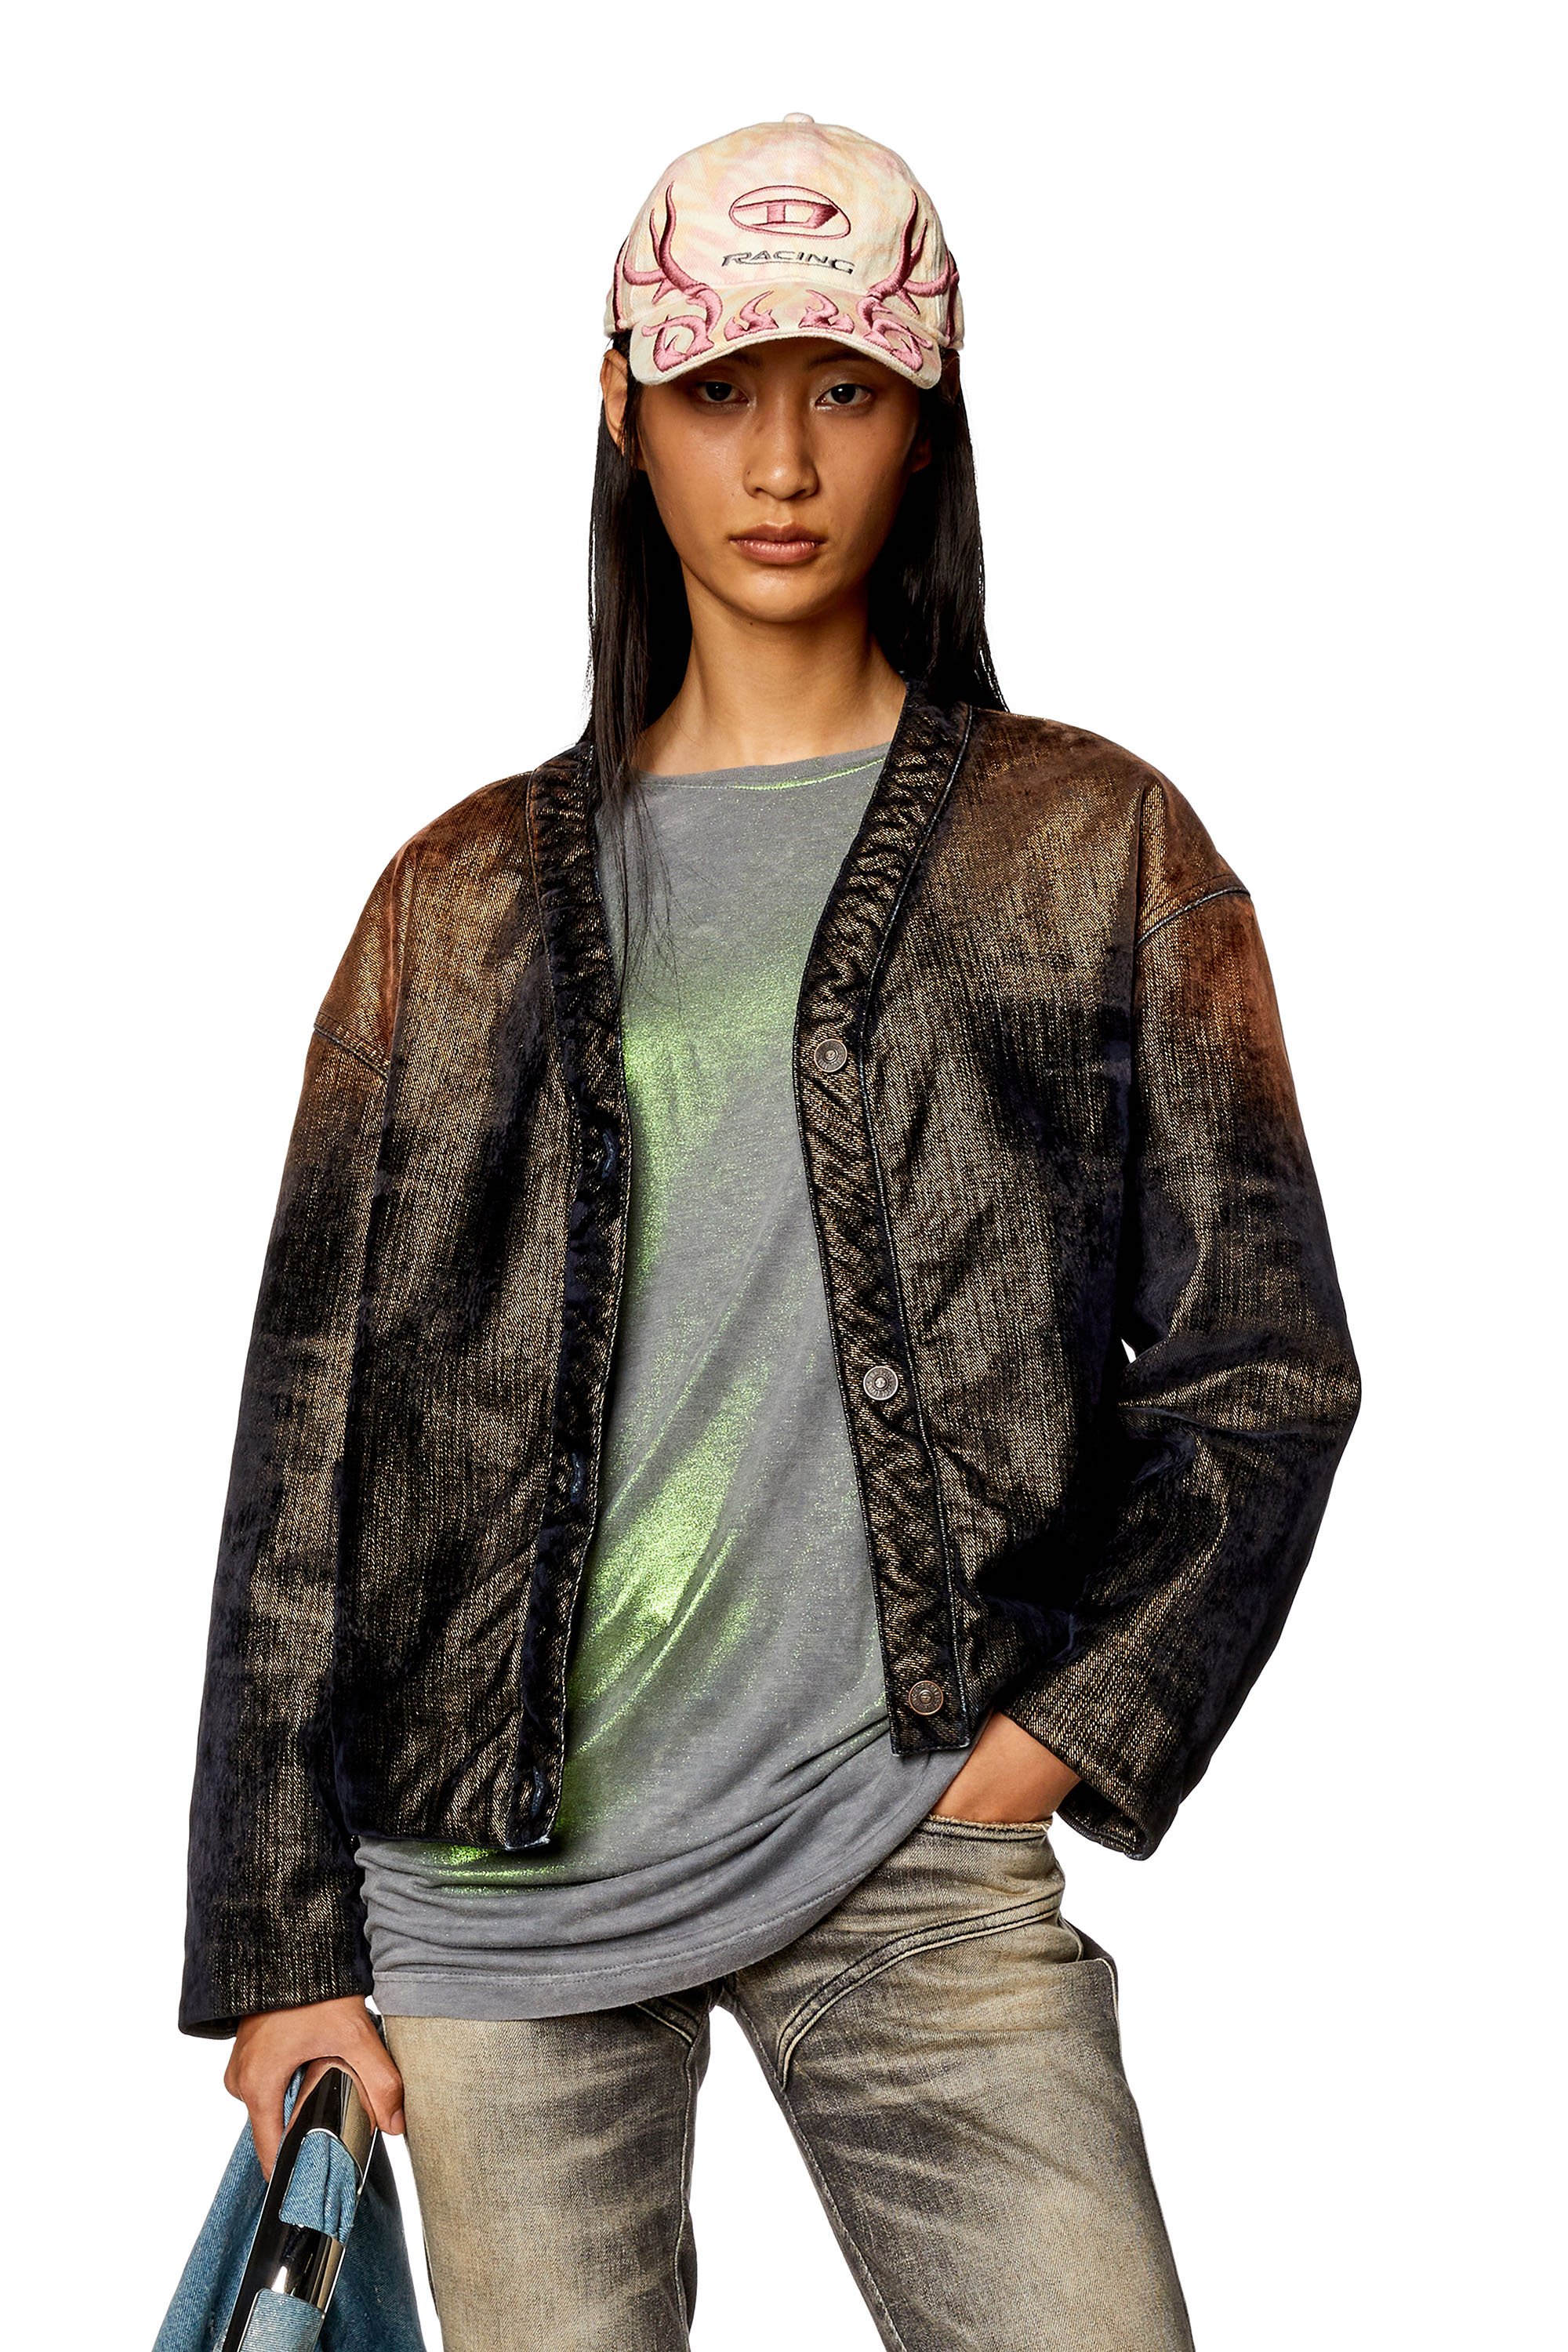 Diesel - DE-CONF-S, Female Jacket in shimmery denim in Multicolor - Image 1